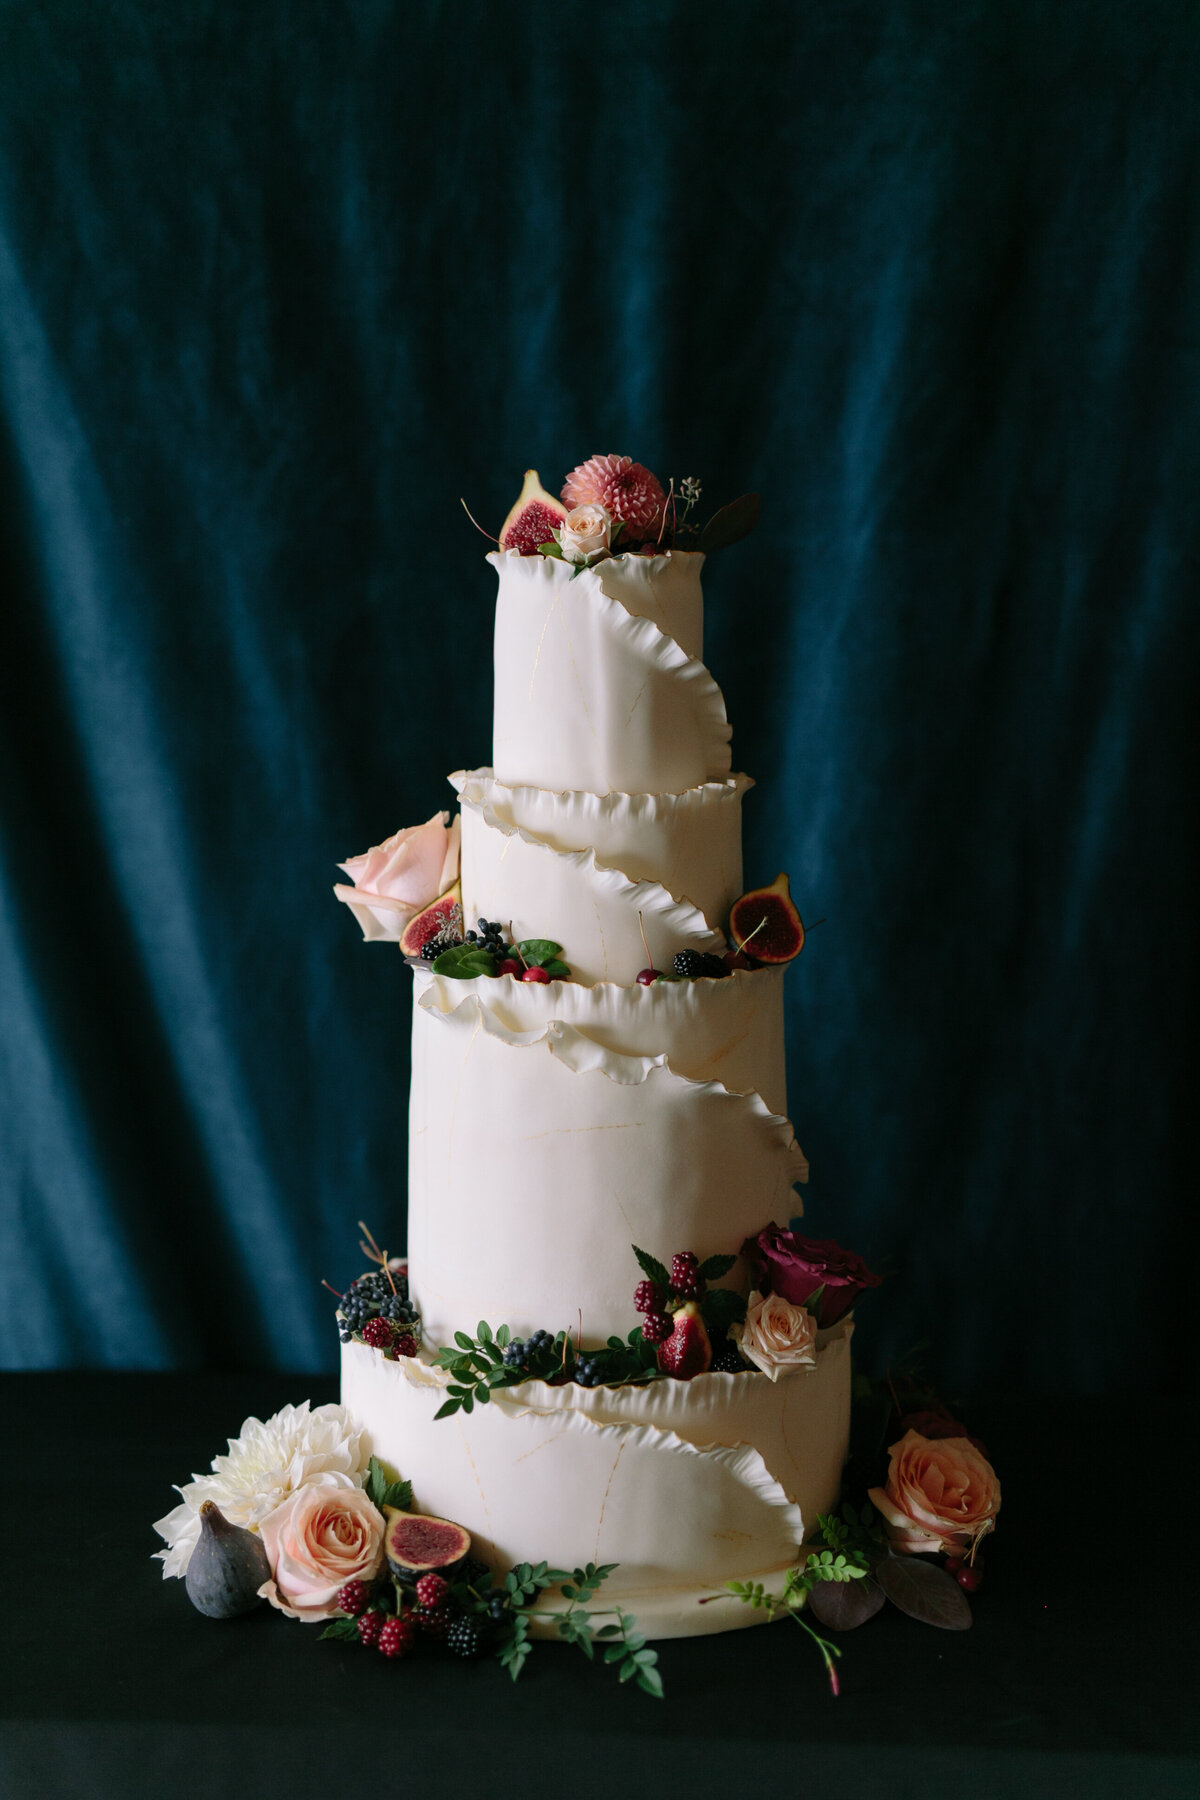 Elegant wedding cake with fresh roses, like a dream themed